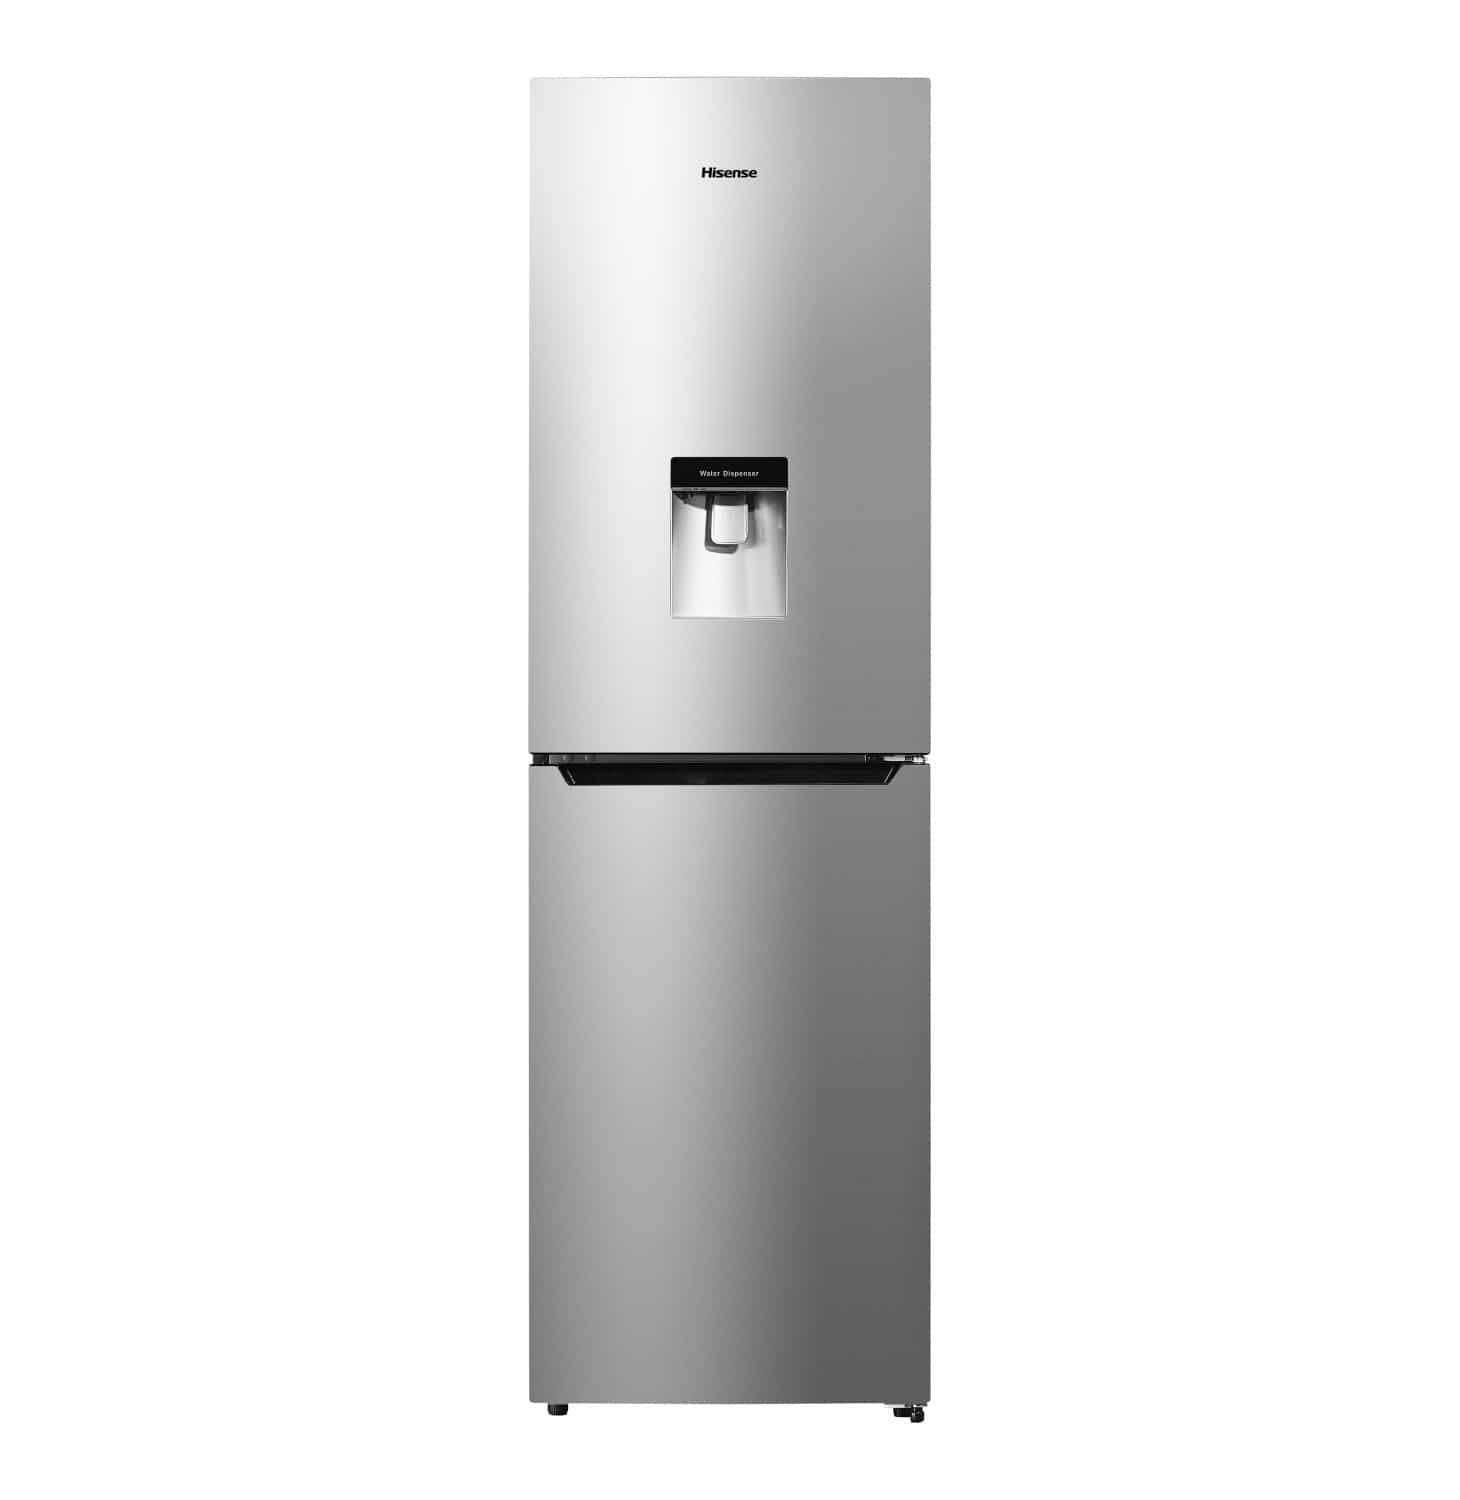 Hisense Mini Refrigerator Manual